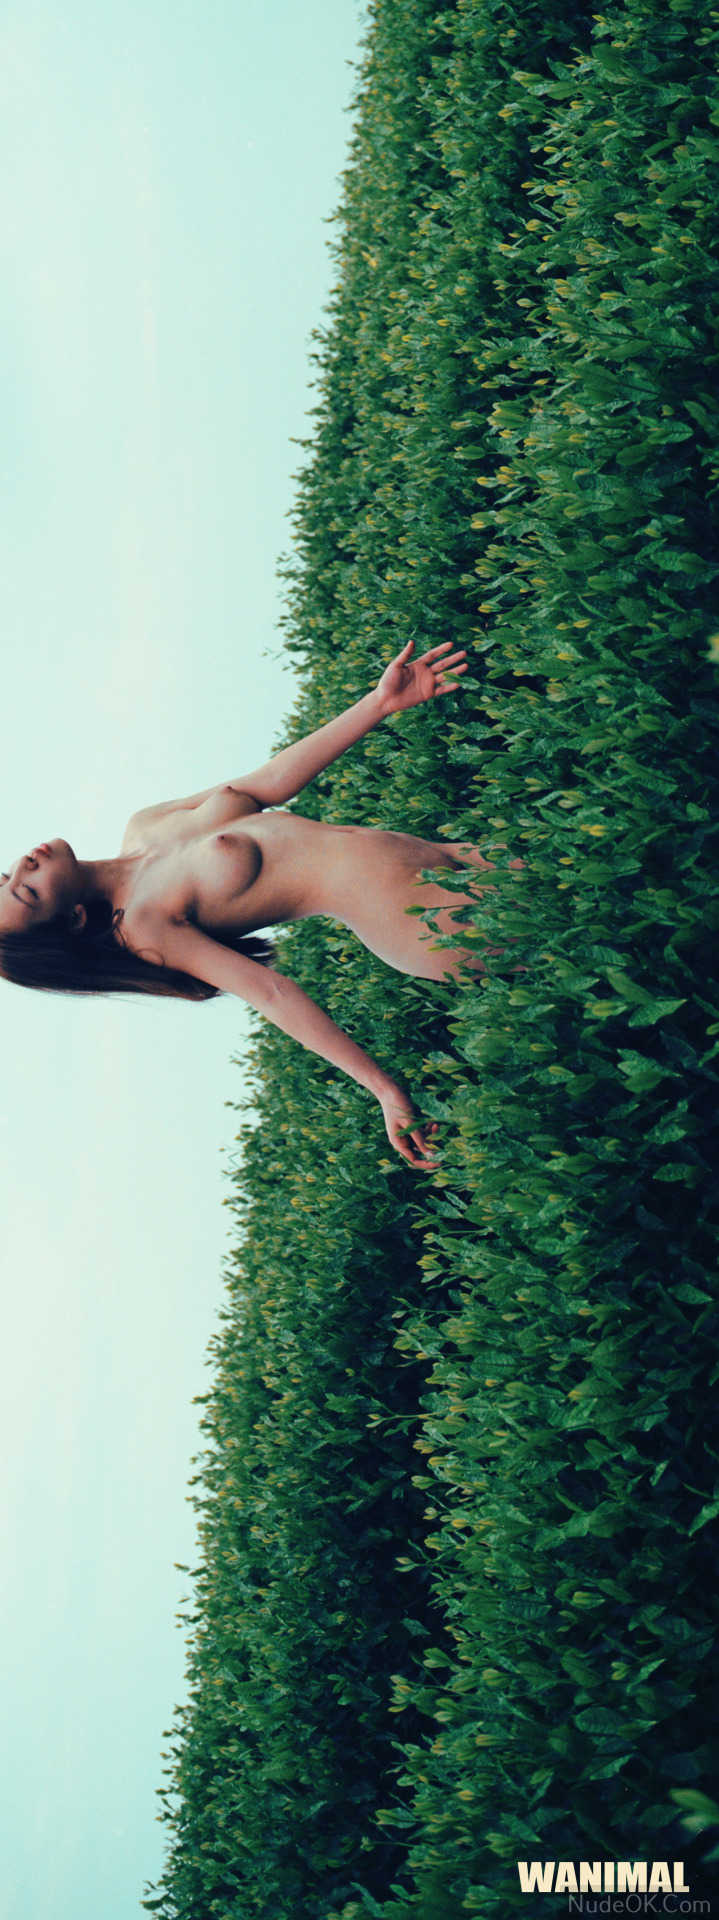 NudeOK.Com - 裸体照片 - 中国模特女孩 - Wanimal 裸体 - 色情 - 裸体艺术 - Photo Album; Model China; Girl Chinese; Naked Sexy; Nude Art Pictures; NudeOK.Com - 裸体照片 - 中国模特女孩 - Wanimal 裸体; 